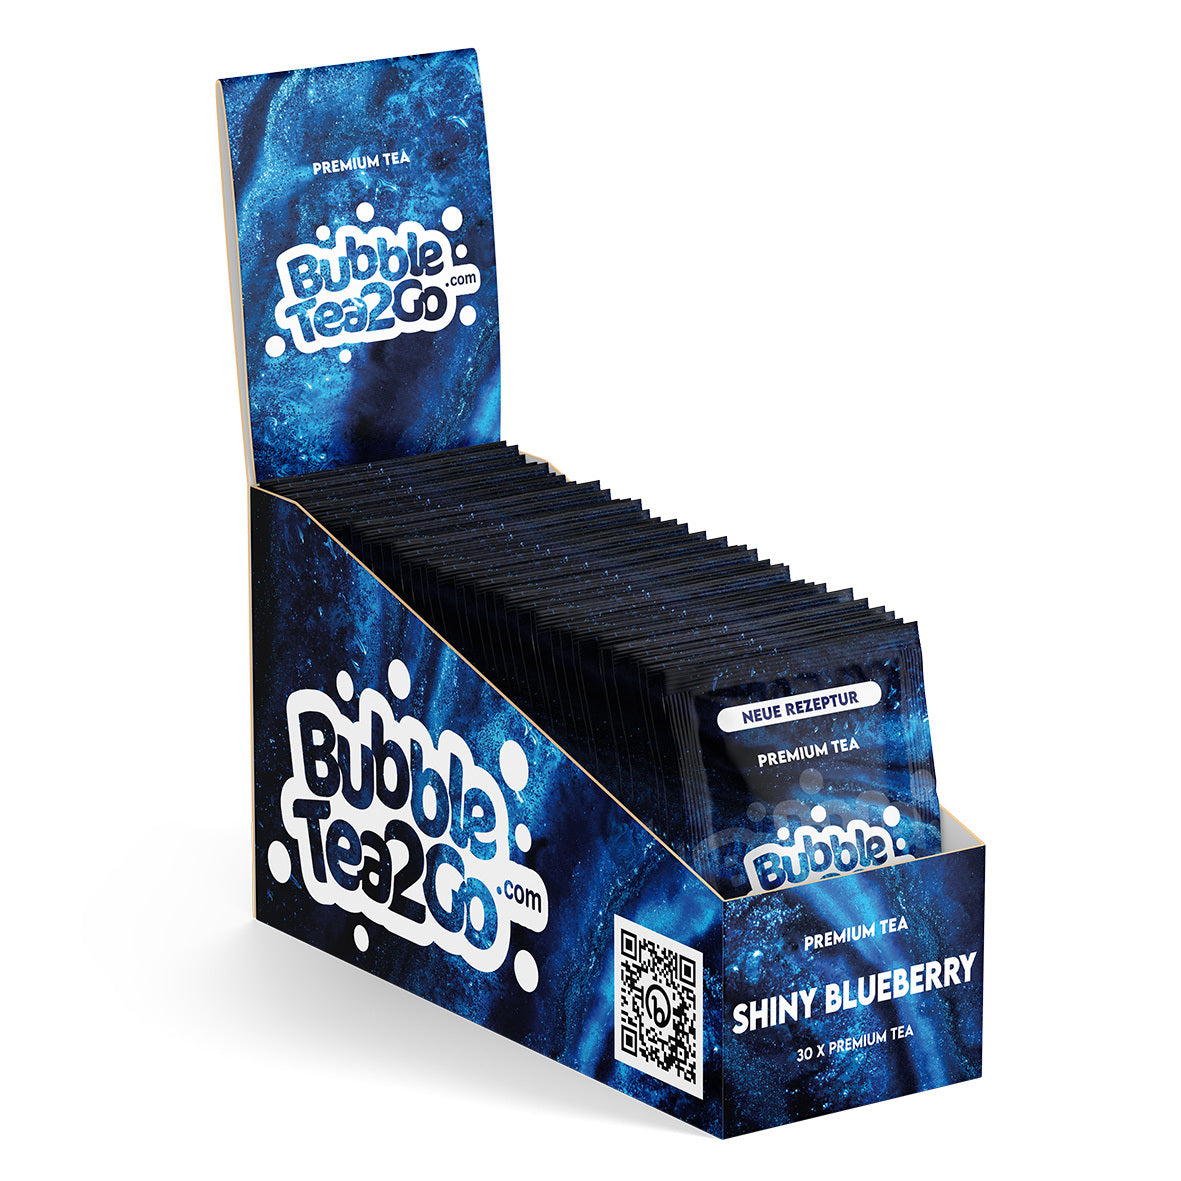 Premium tea advantage box - Shiny Blueberry (30 pcs.)